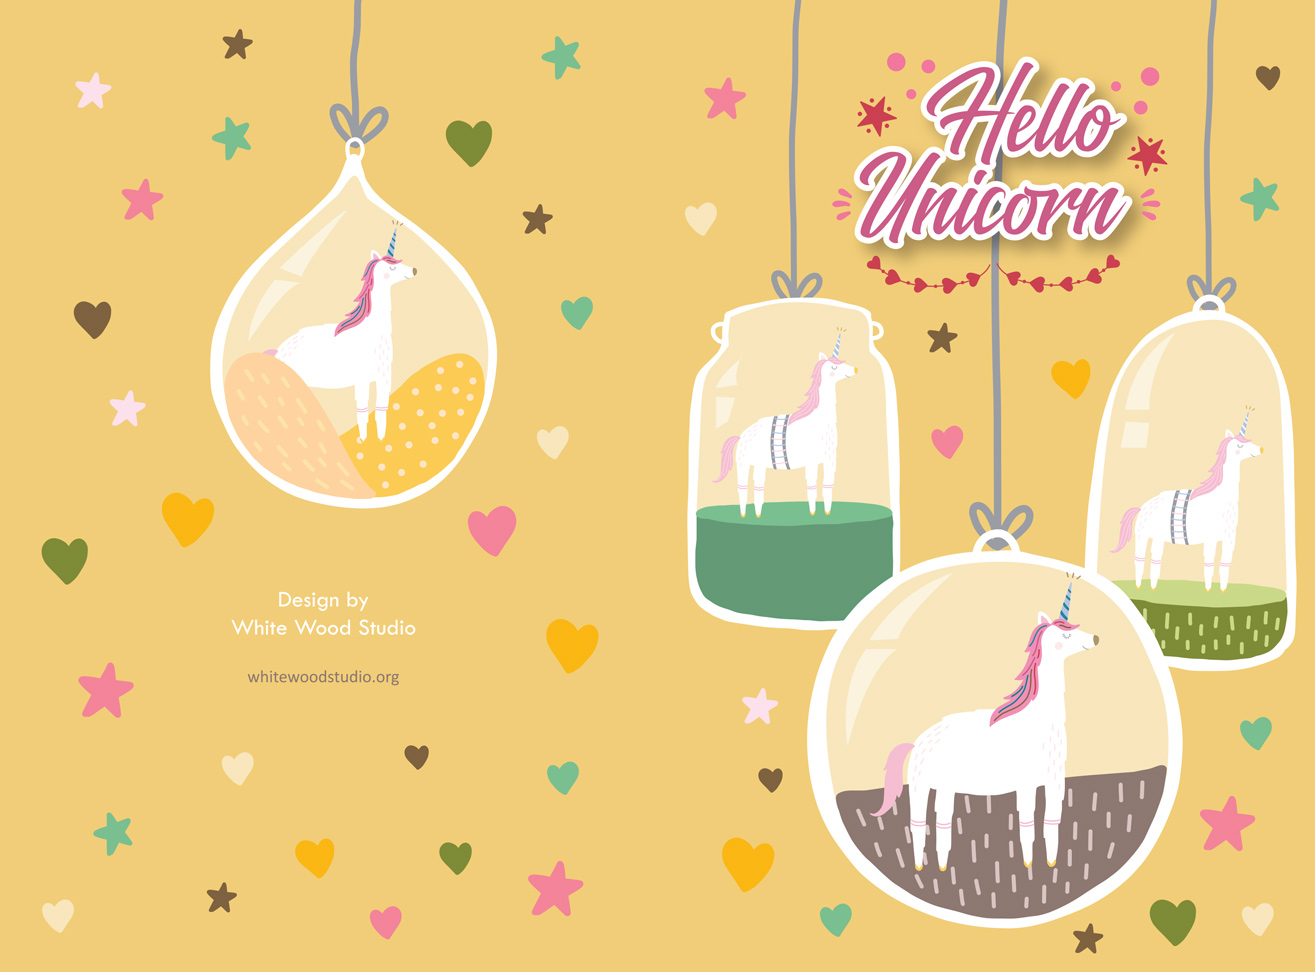 Hello-unicorn-Notebook-journal-design-by-white-wood-studio